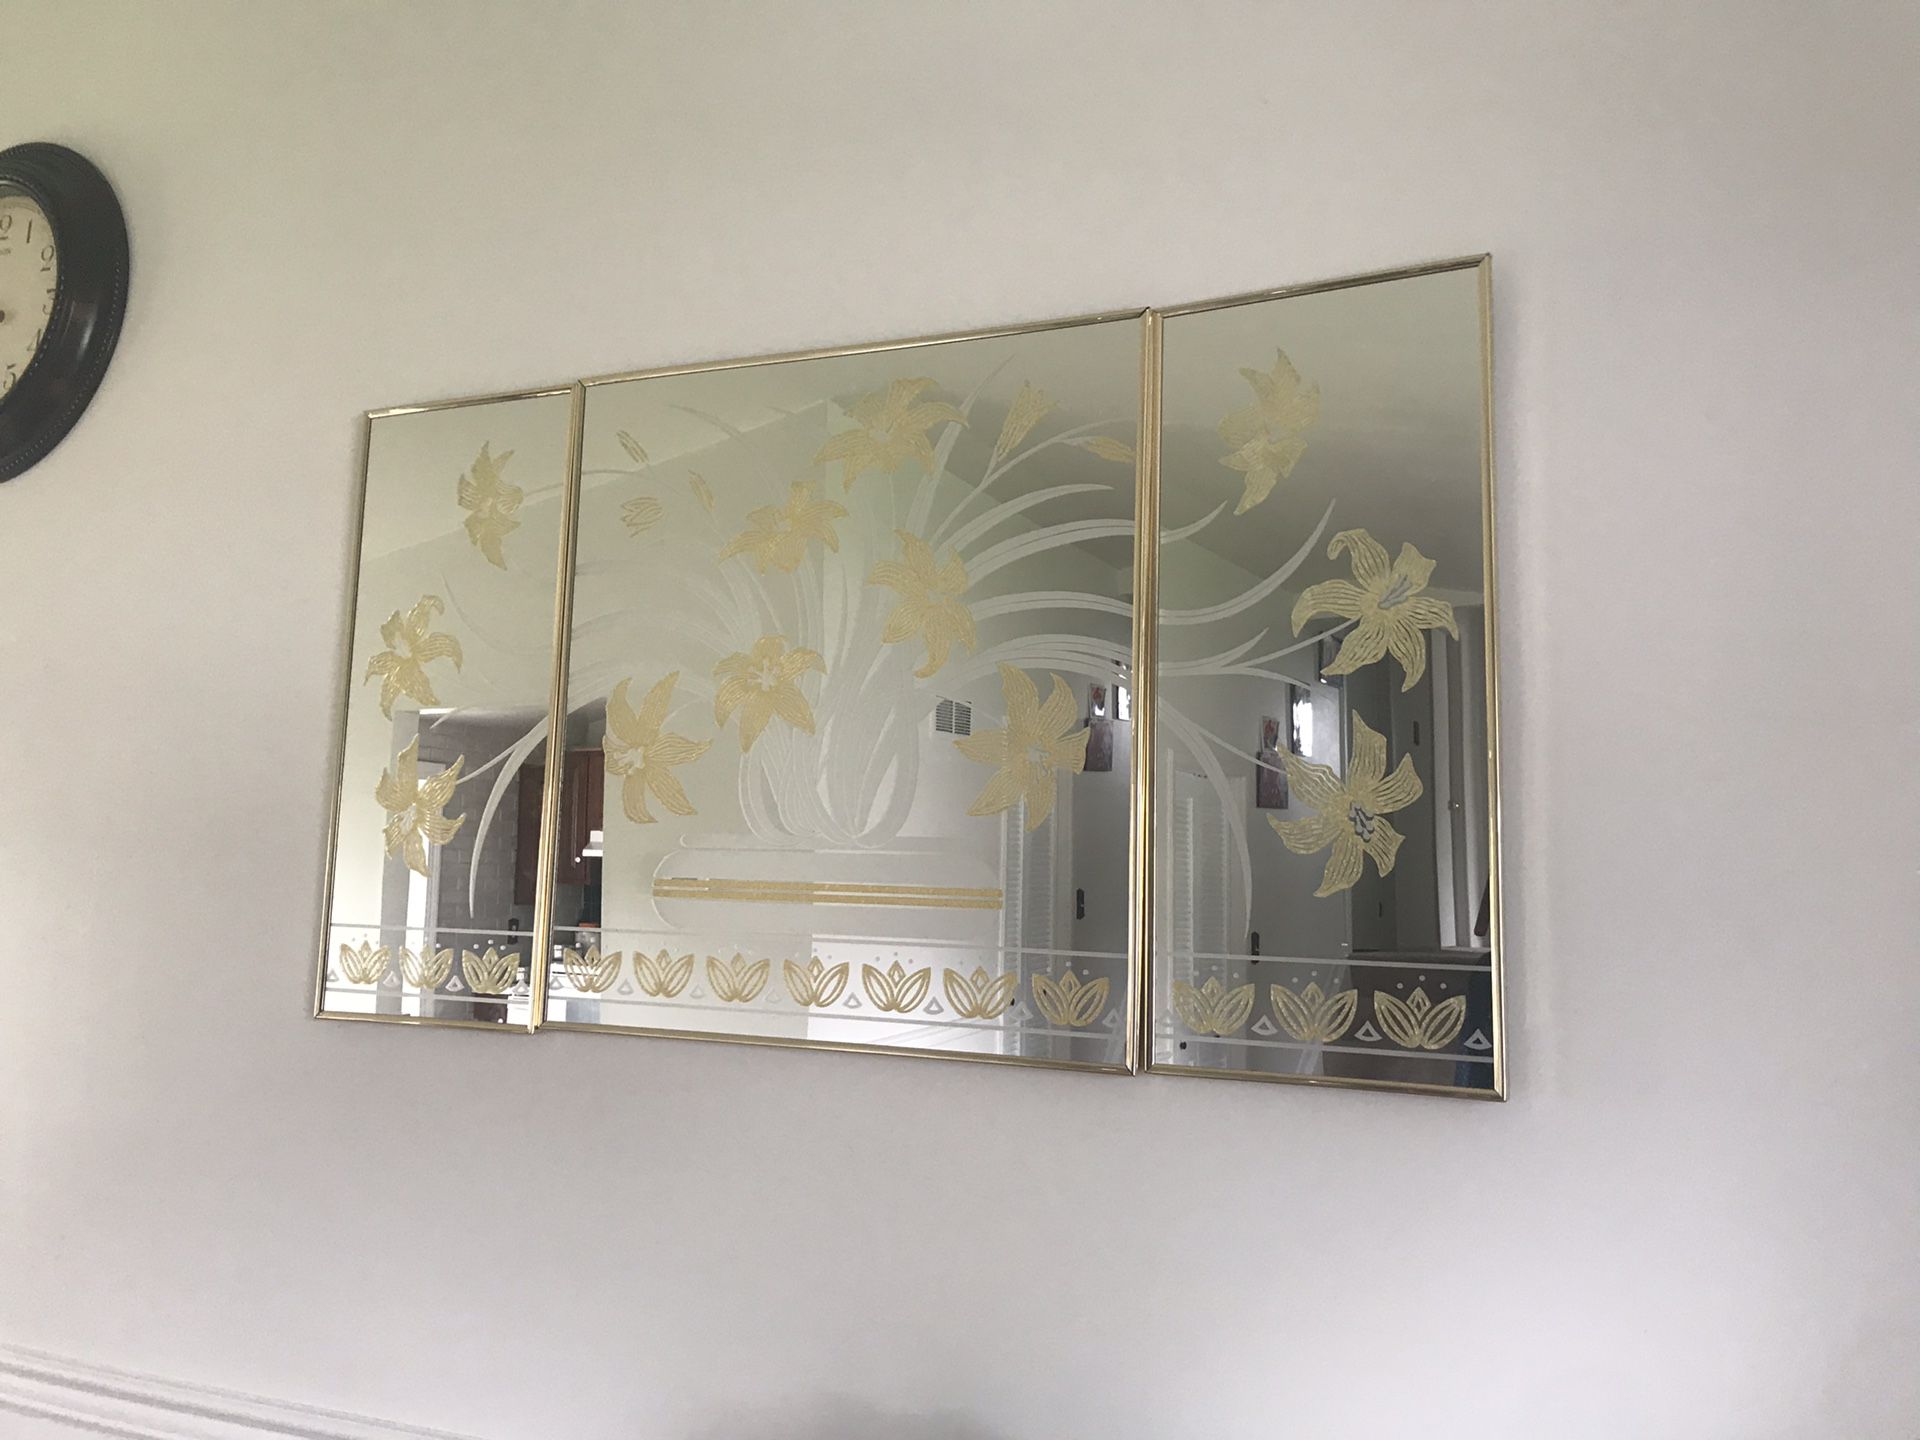 Wall decorative mirror